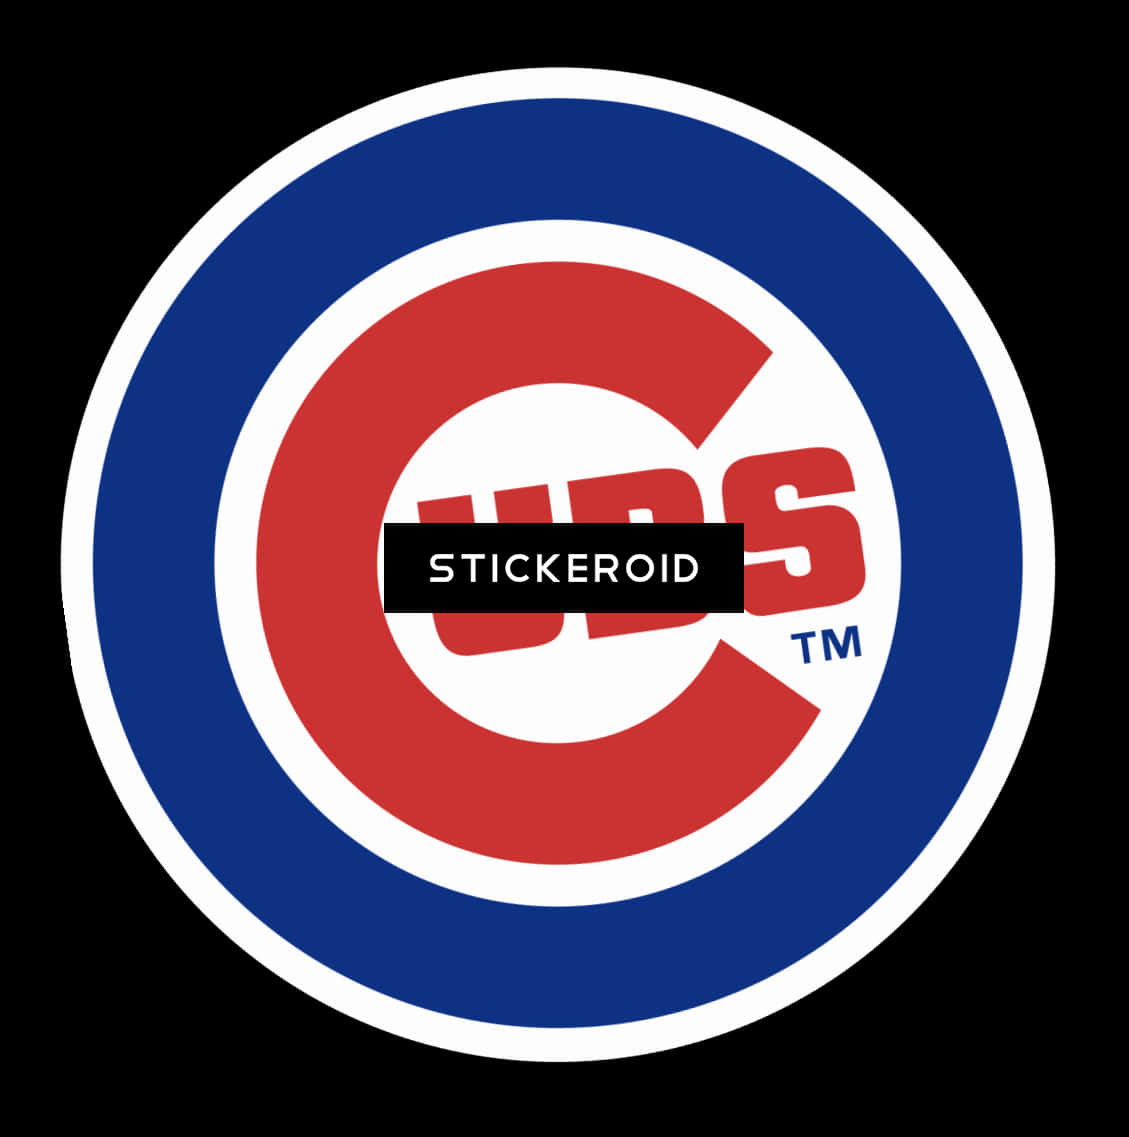 A Logo Of A Chicago Cubs Team